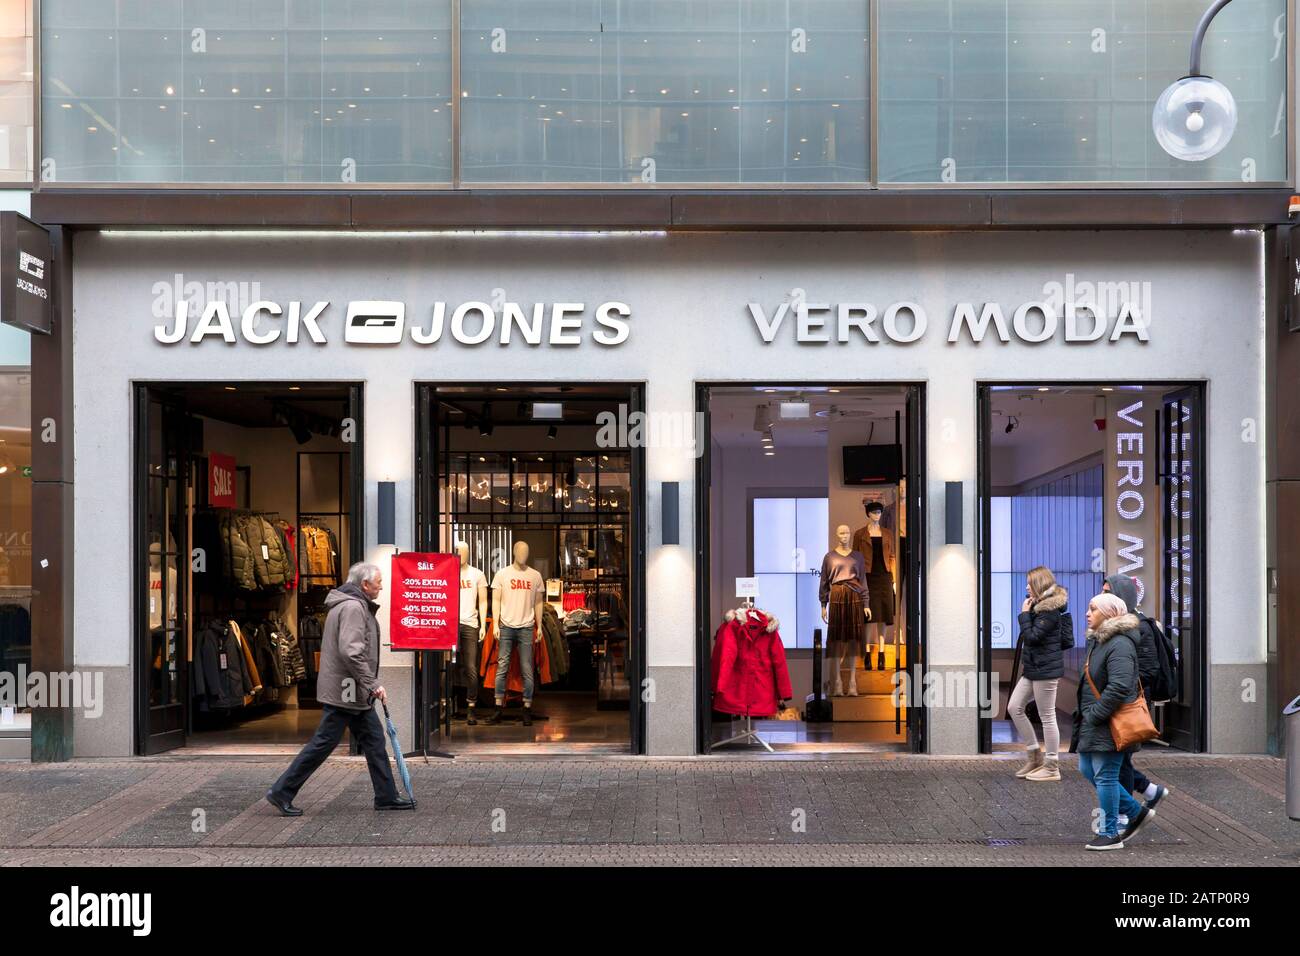 Vero moda jack jones store hi-res stock photography and images - Alamy